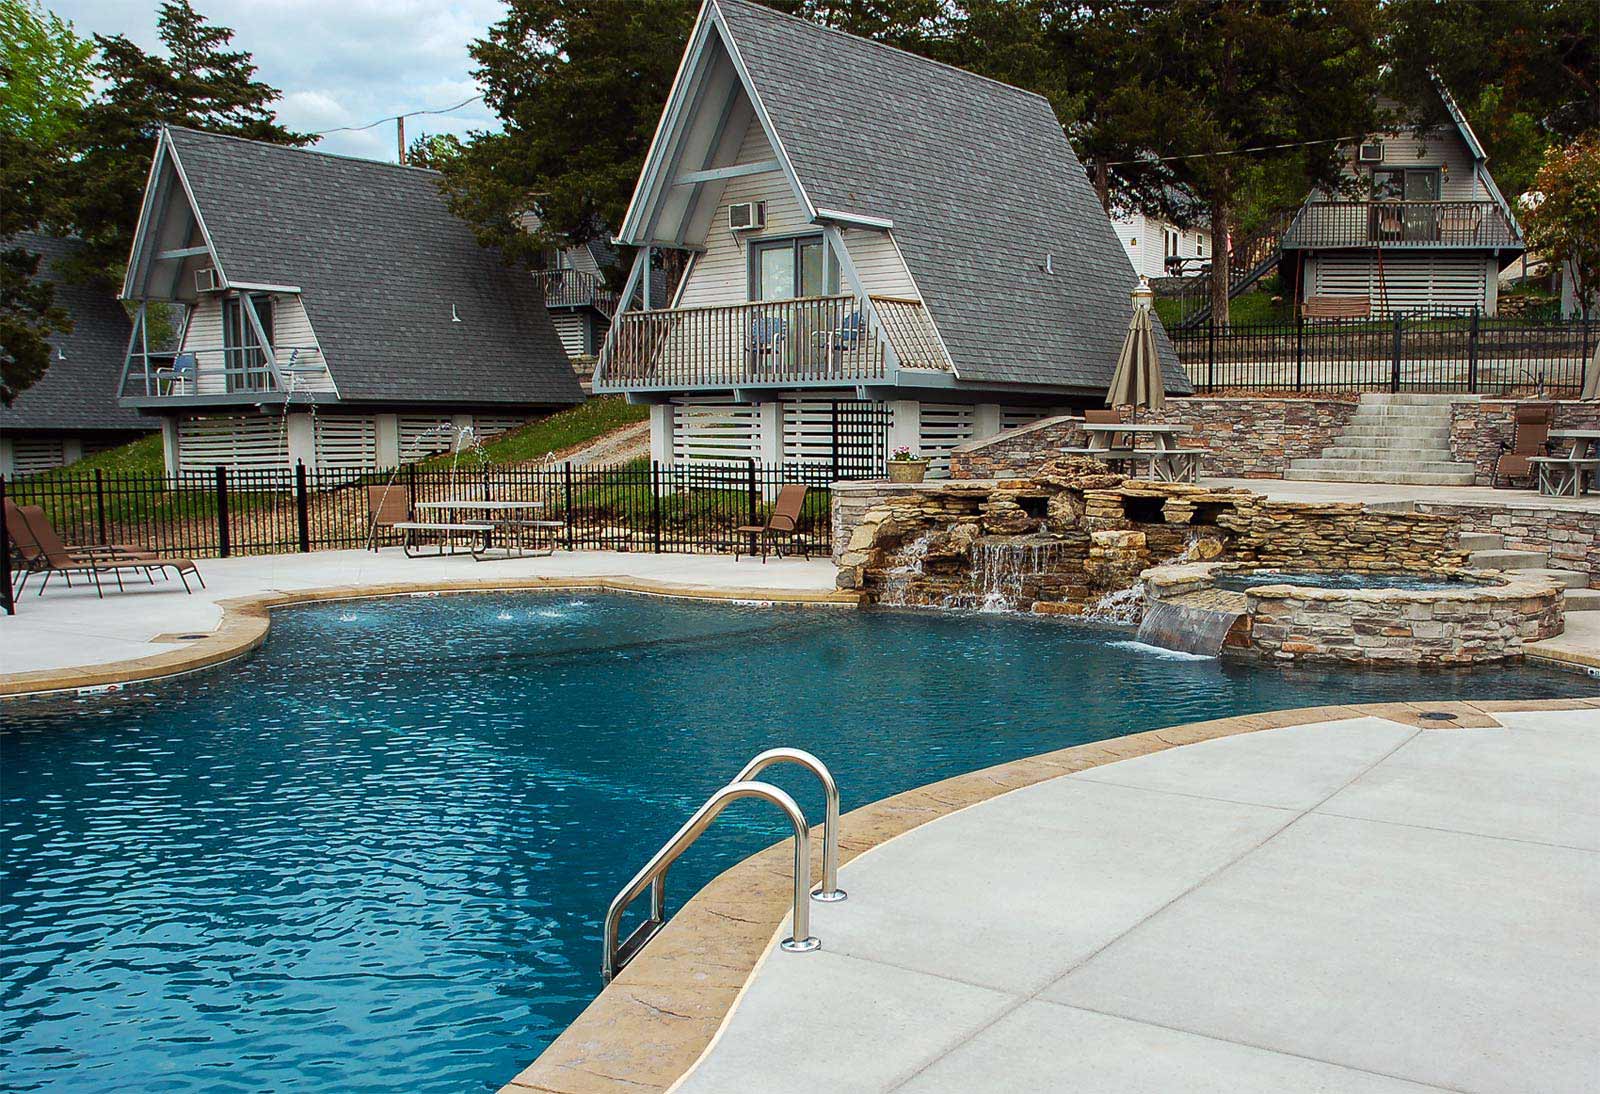 Swimming pool, 9ft hot tub, tanning shelf, vanishing edge and deck jets at Alpine Lodge Resort, Branson, Missouri.